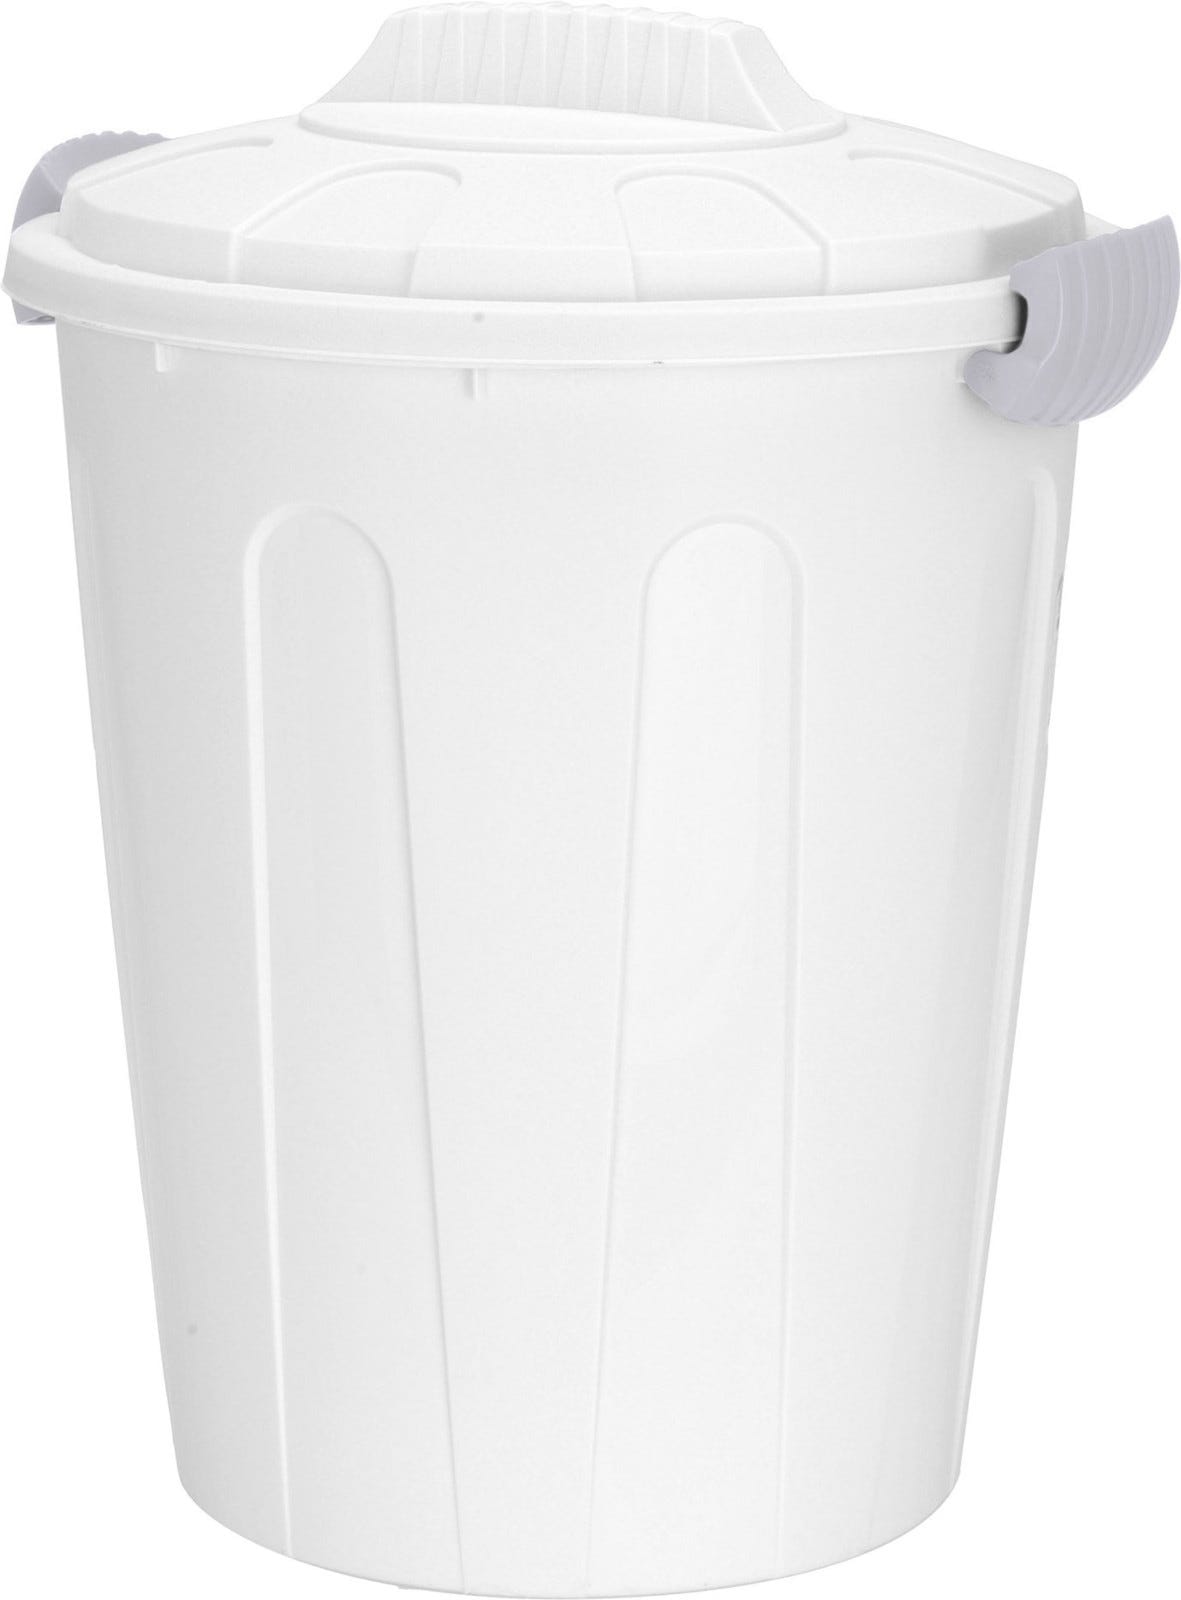 White Maxibin 23 Litres (6.07 gal) Maxi nappy toy storage bin waste bin laundry bin Wheelie Bin Waste Bin The low profile, Maxi barrel is for universal use with 2 durable clasp grips for comfort -WMB